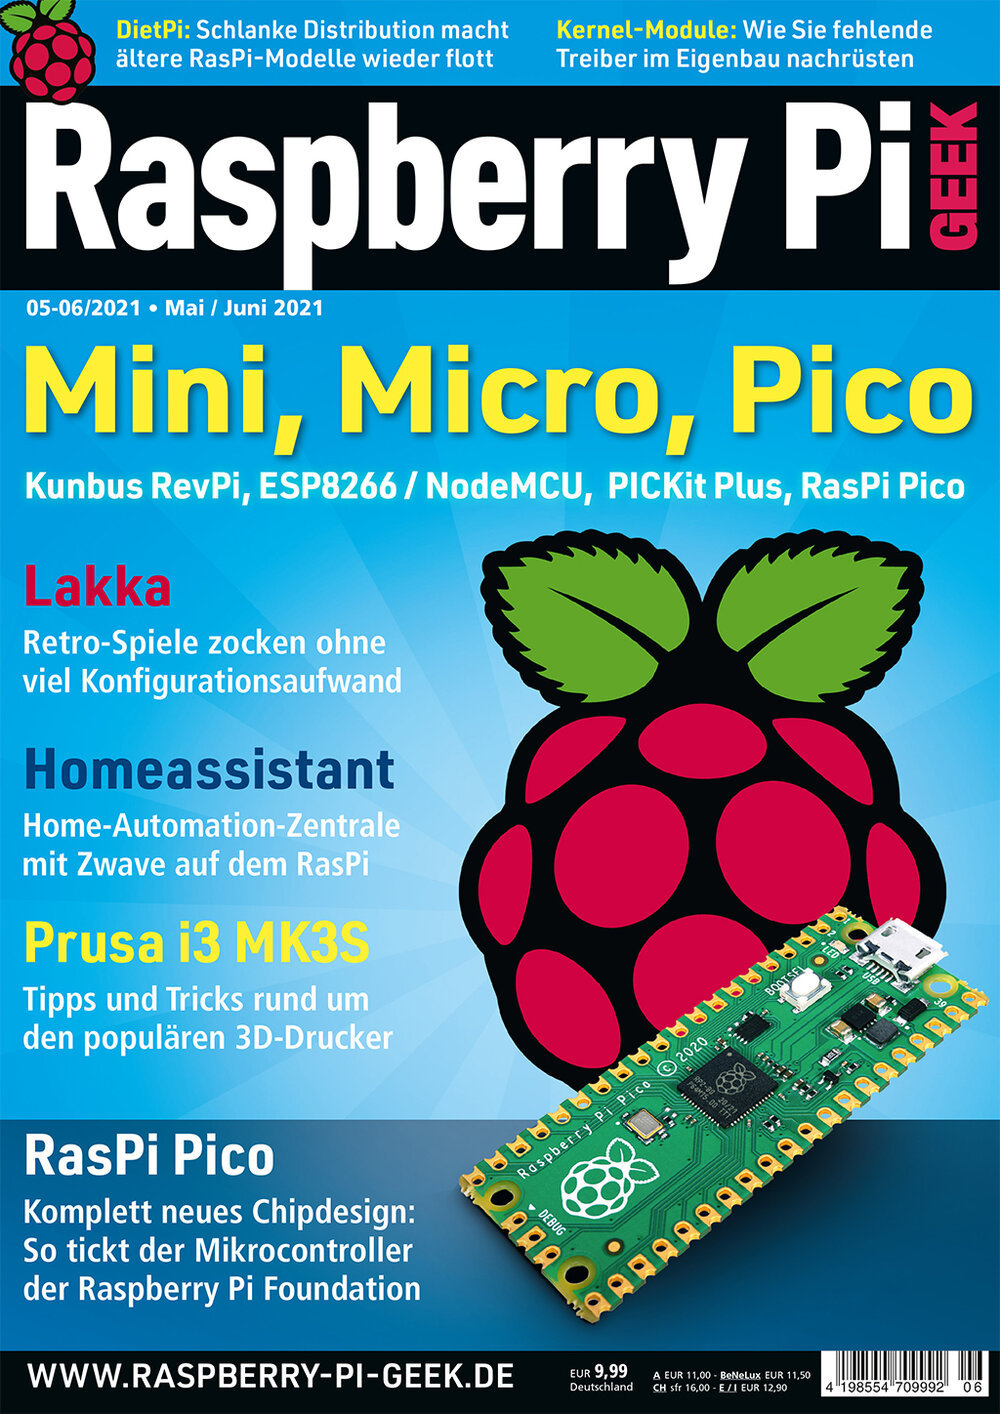 Raspberry Pi Geek ePaper 06/2021